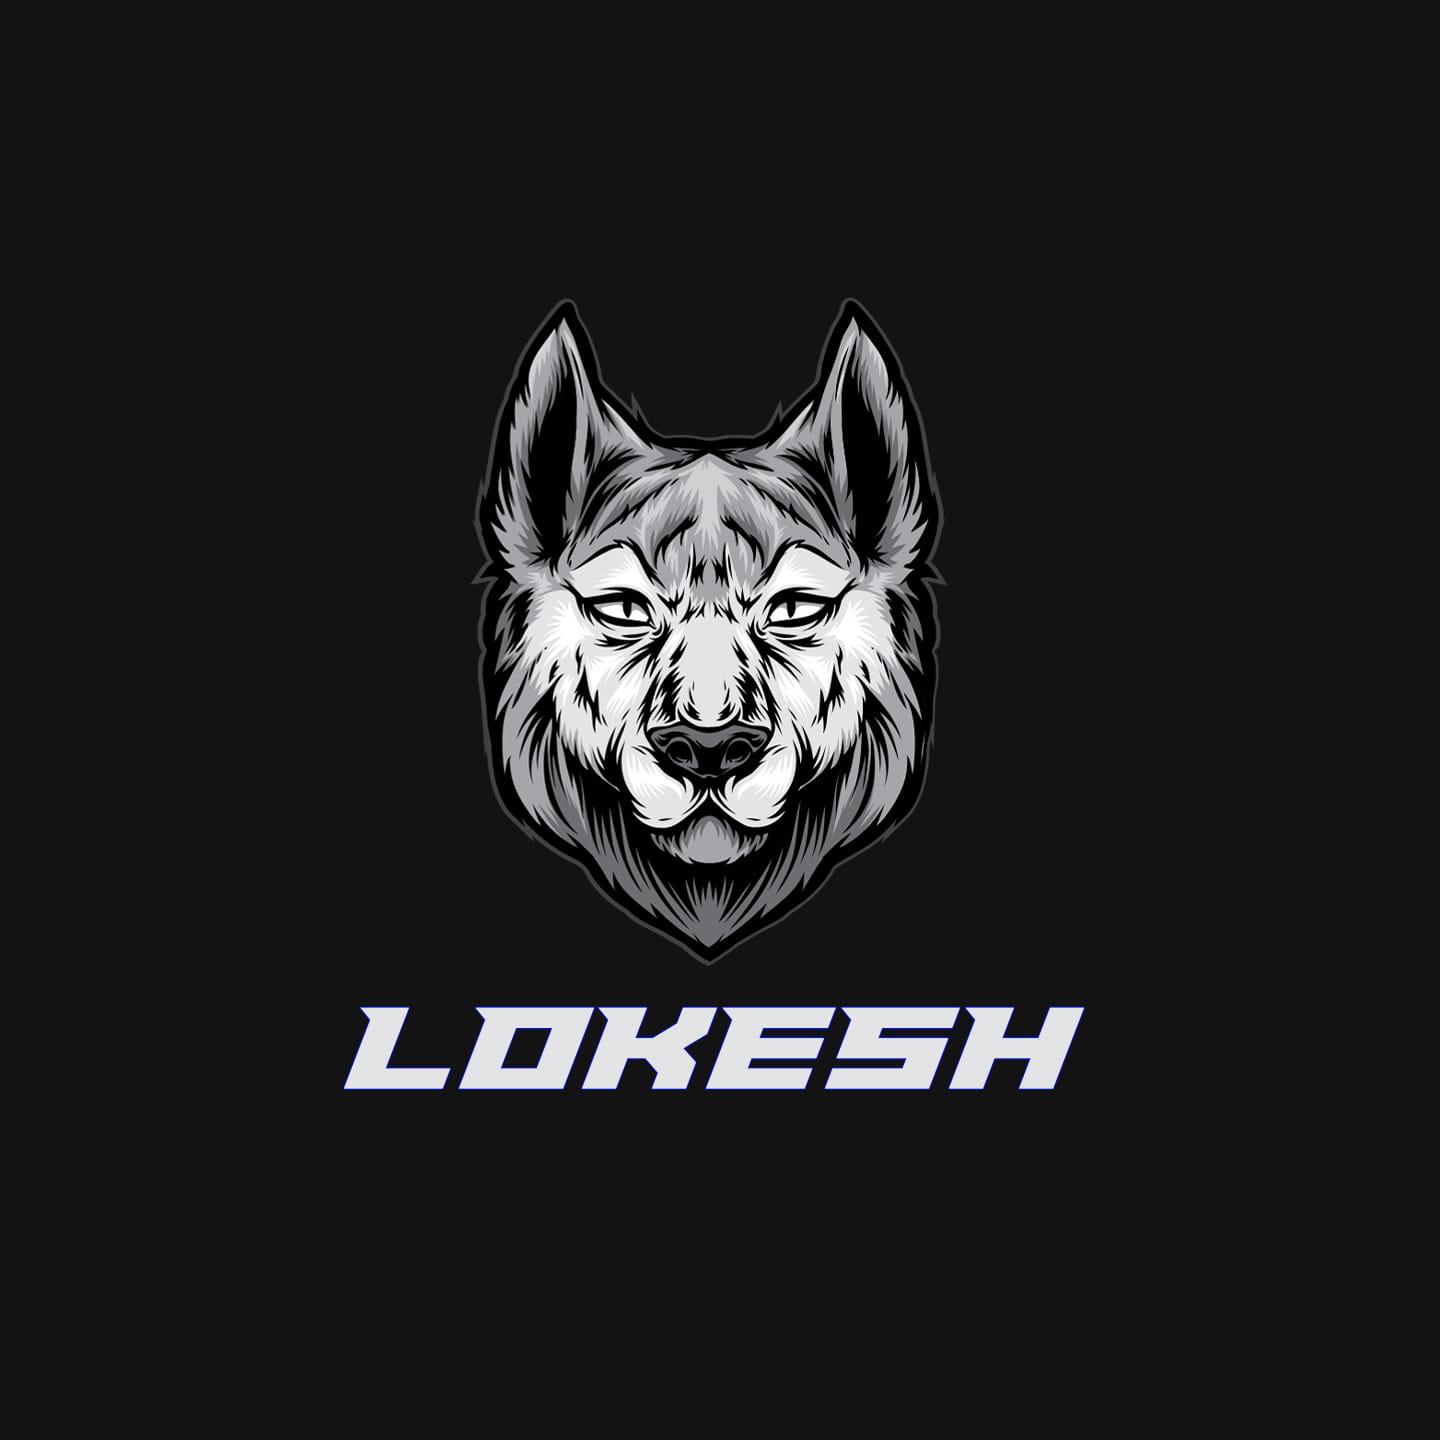 lokesh logo - YouTube